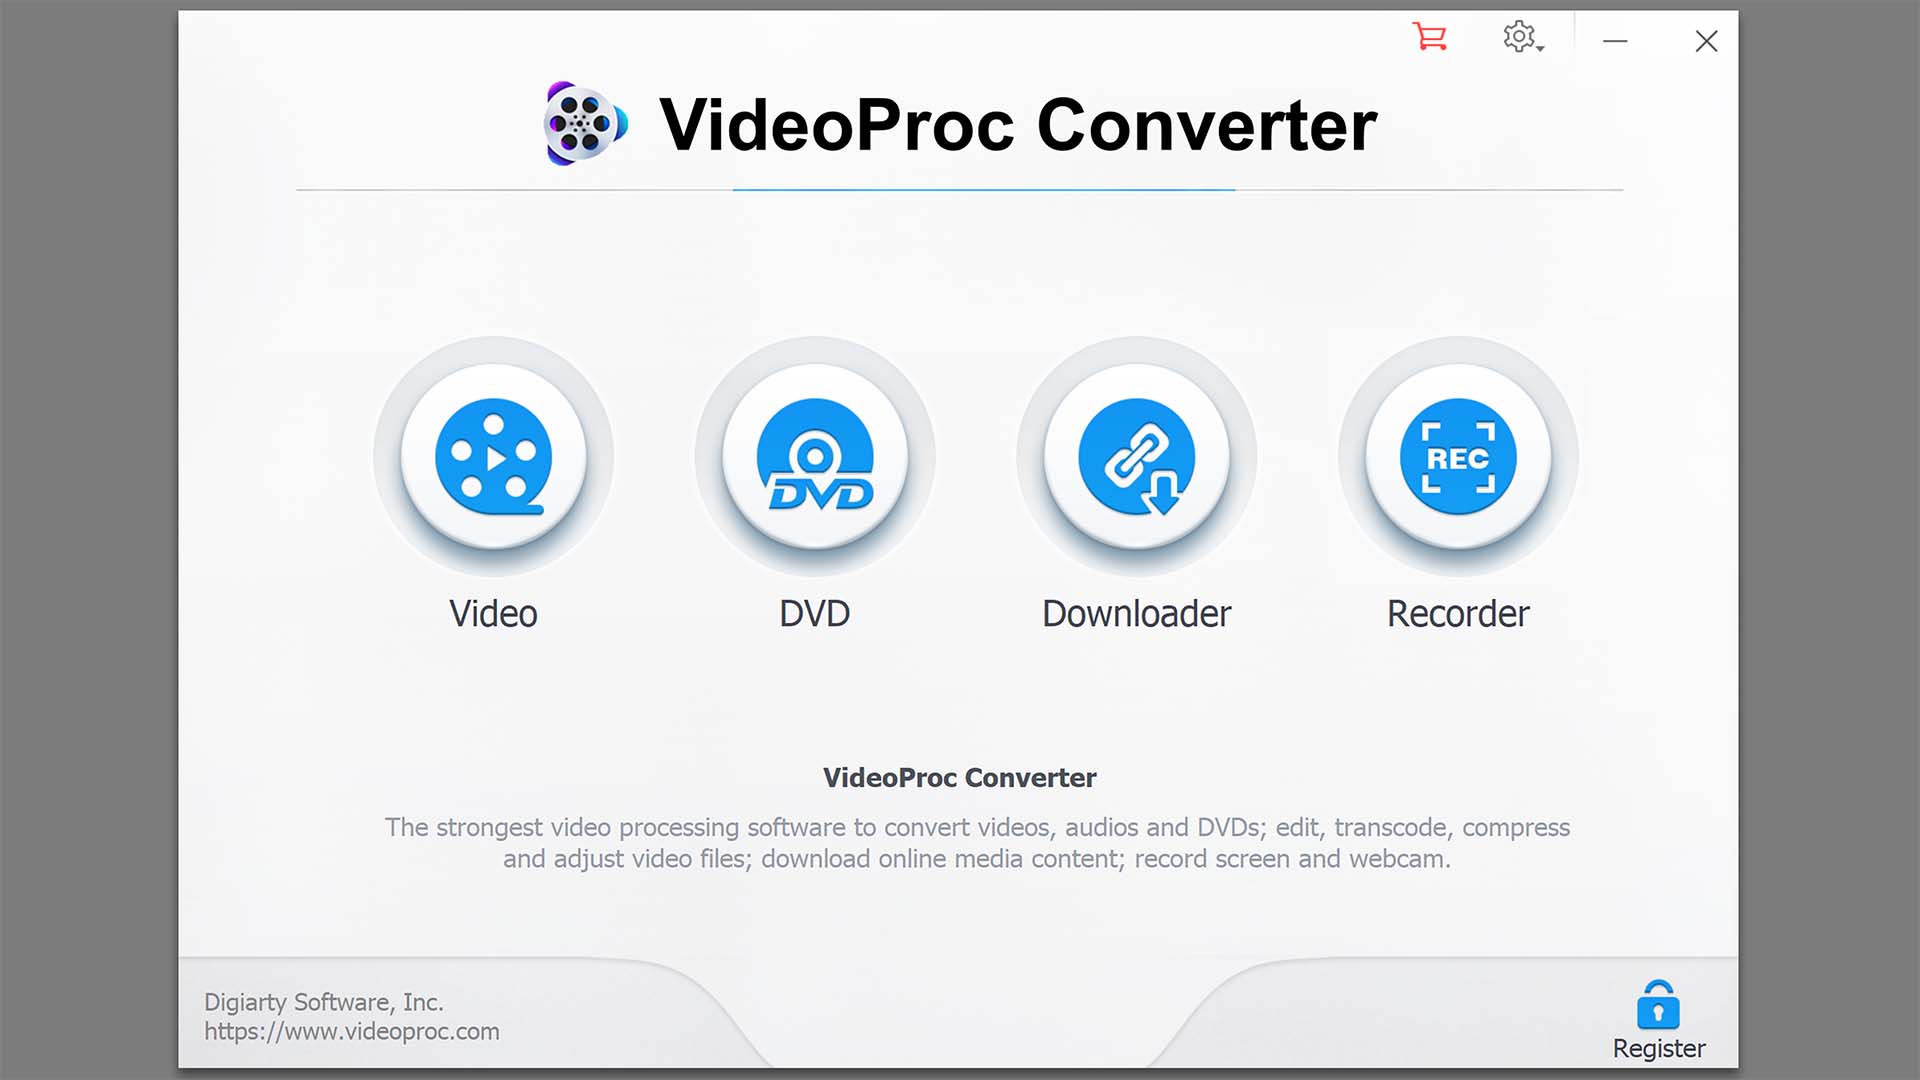 videoproc converter review